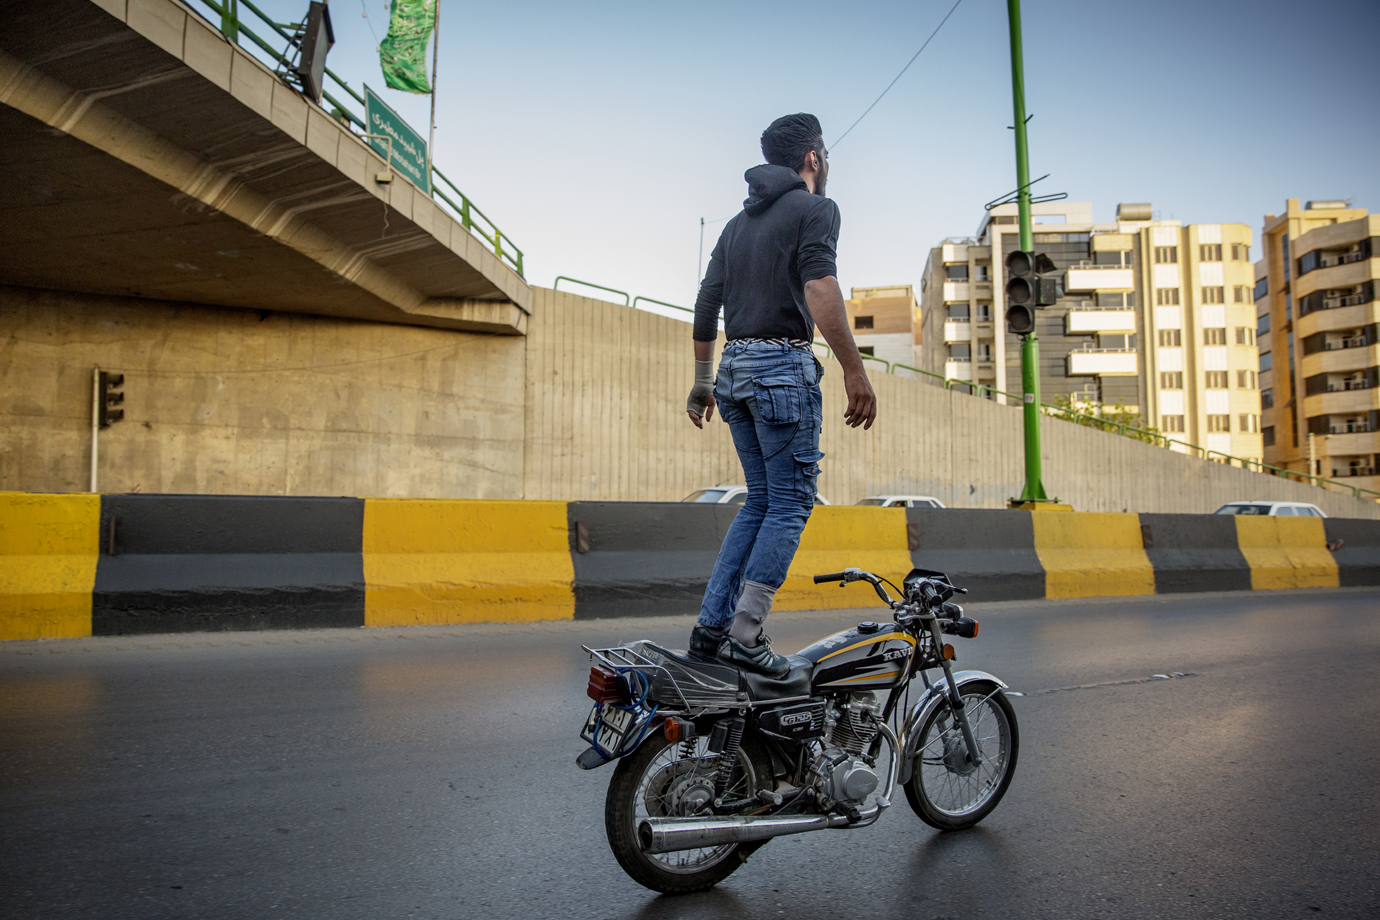  Motorcycle rider makes daring stunts with his bike on Tehran's highway / Iran 